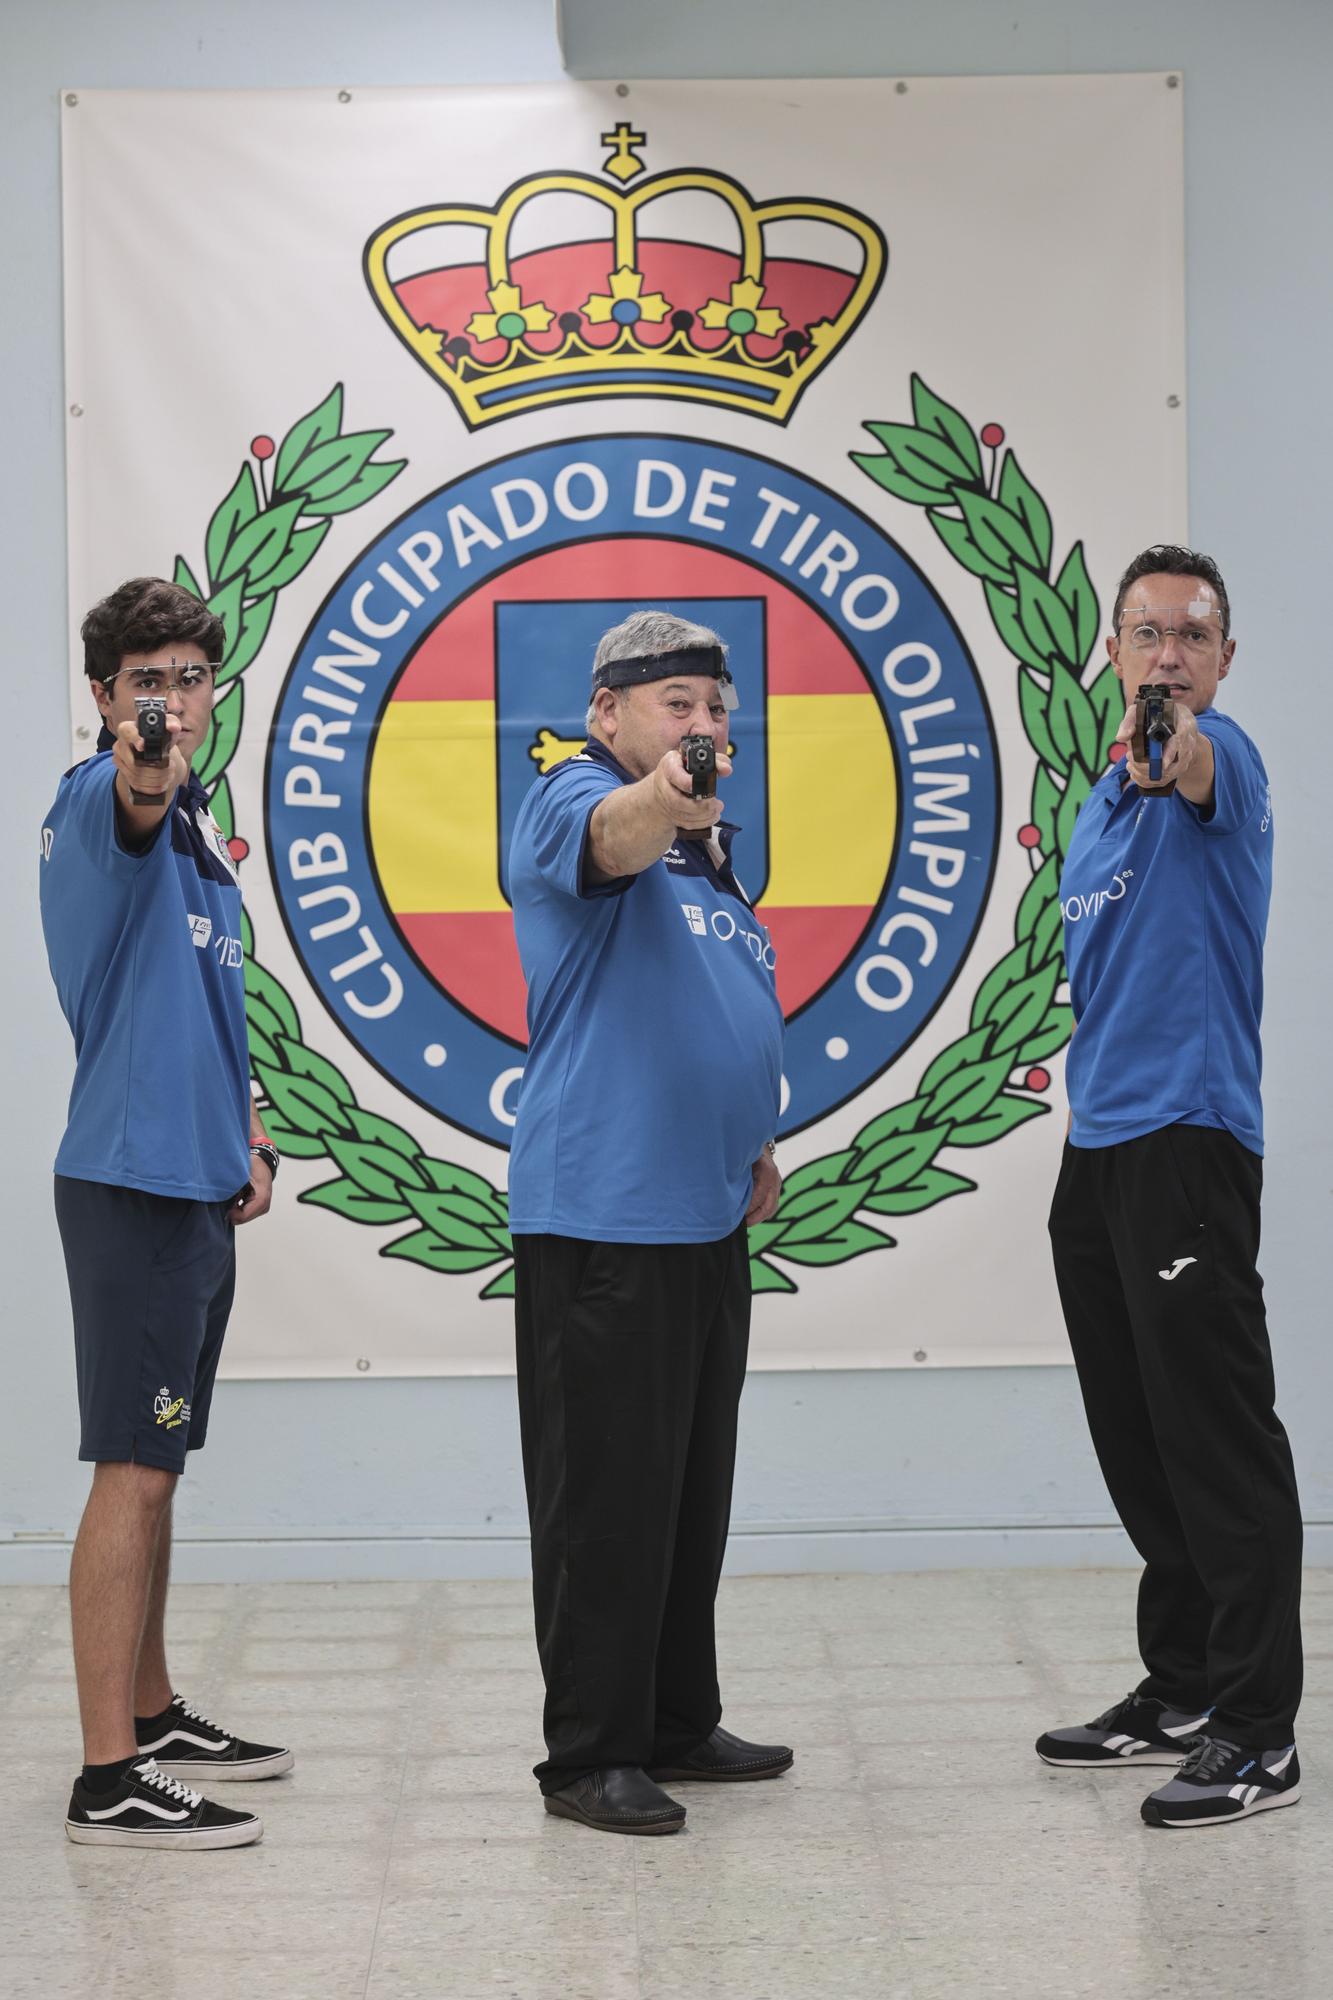 Tres miembros del Club Principado de Tiro Olímpico reflexionan sobre este deporte